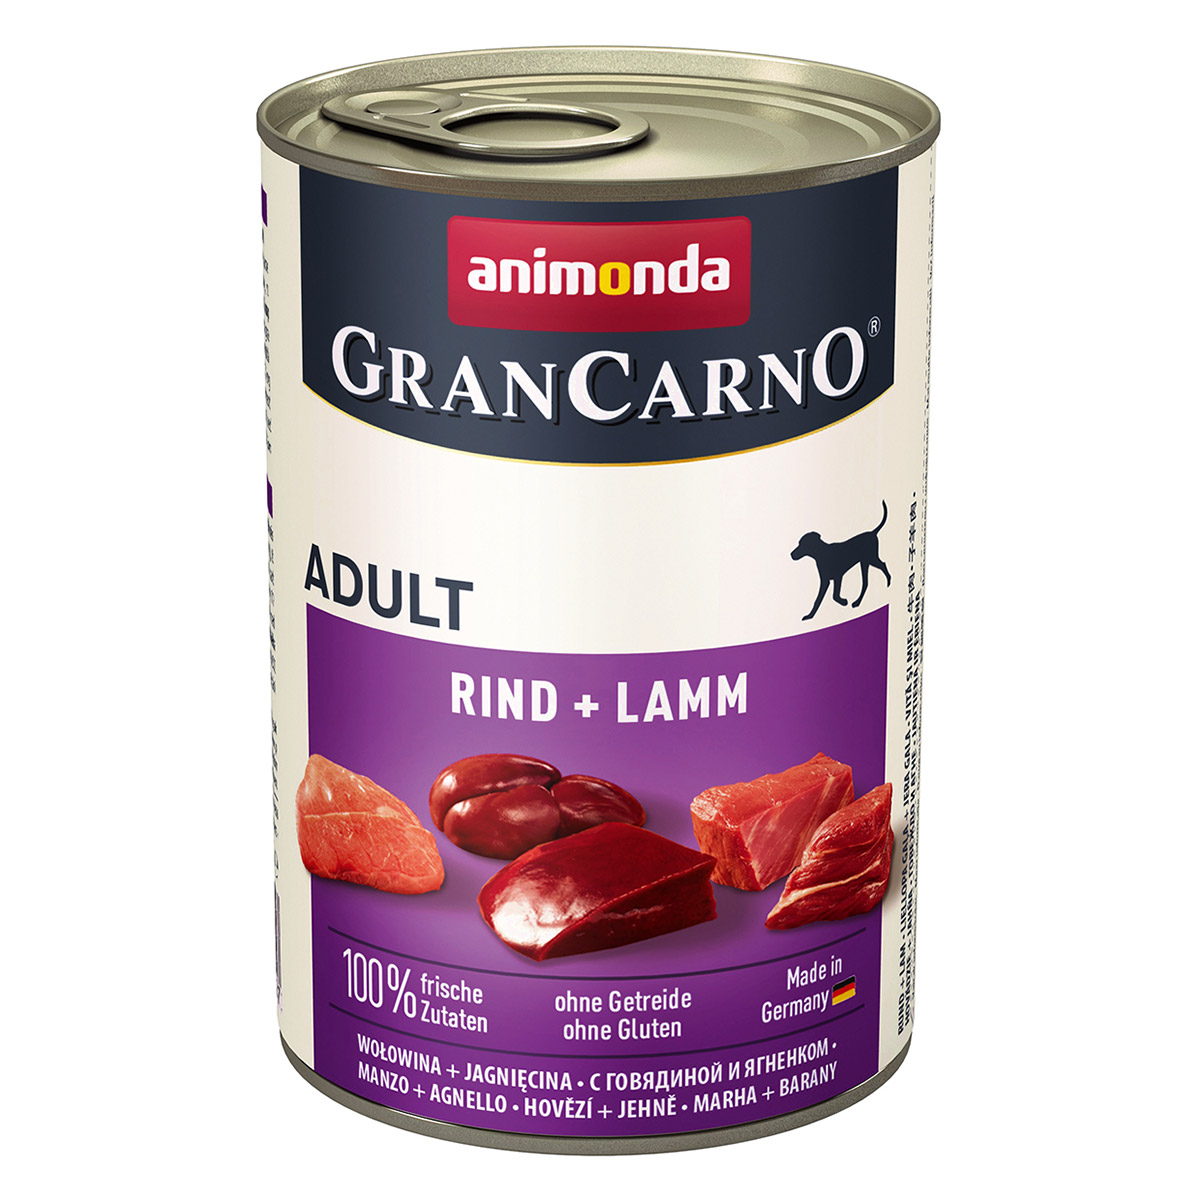 animonda grancarno adult rind lamm 400g